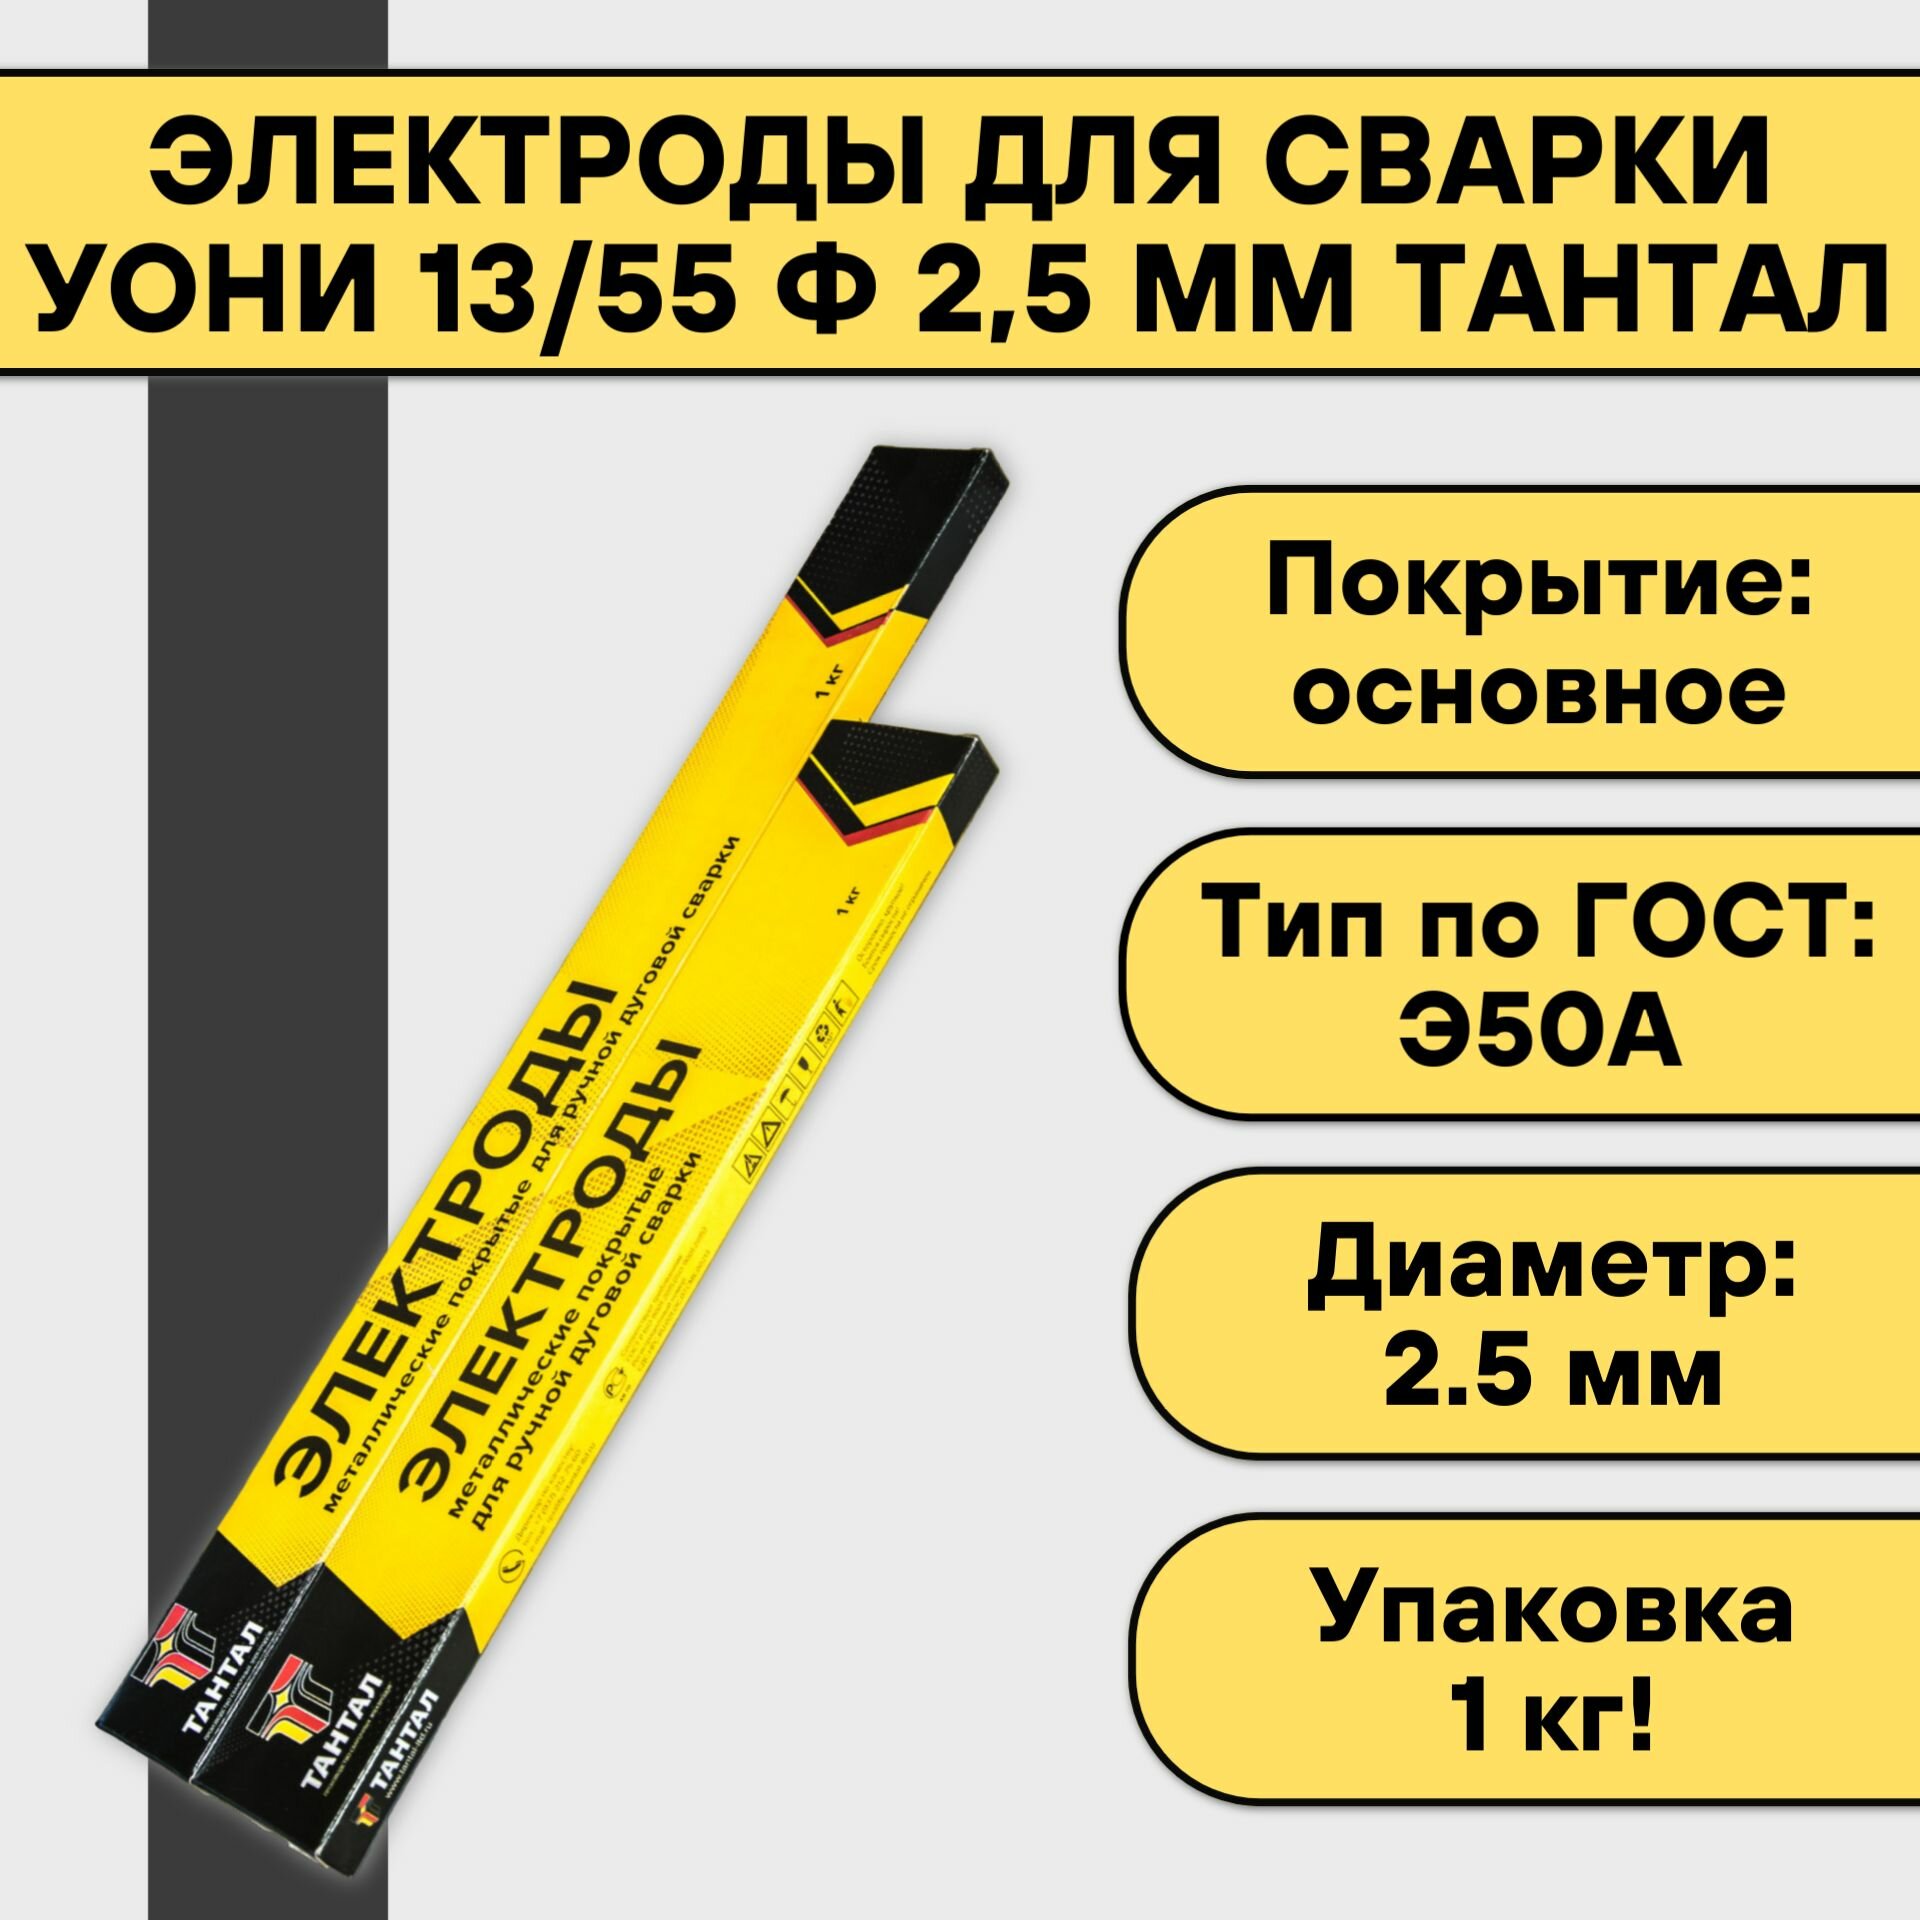 Электроды для сварки УОНИ 13/55 ф 2,5 мм (1 кг) Тантал